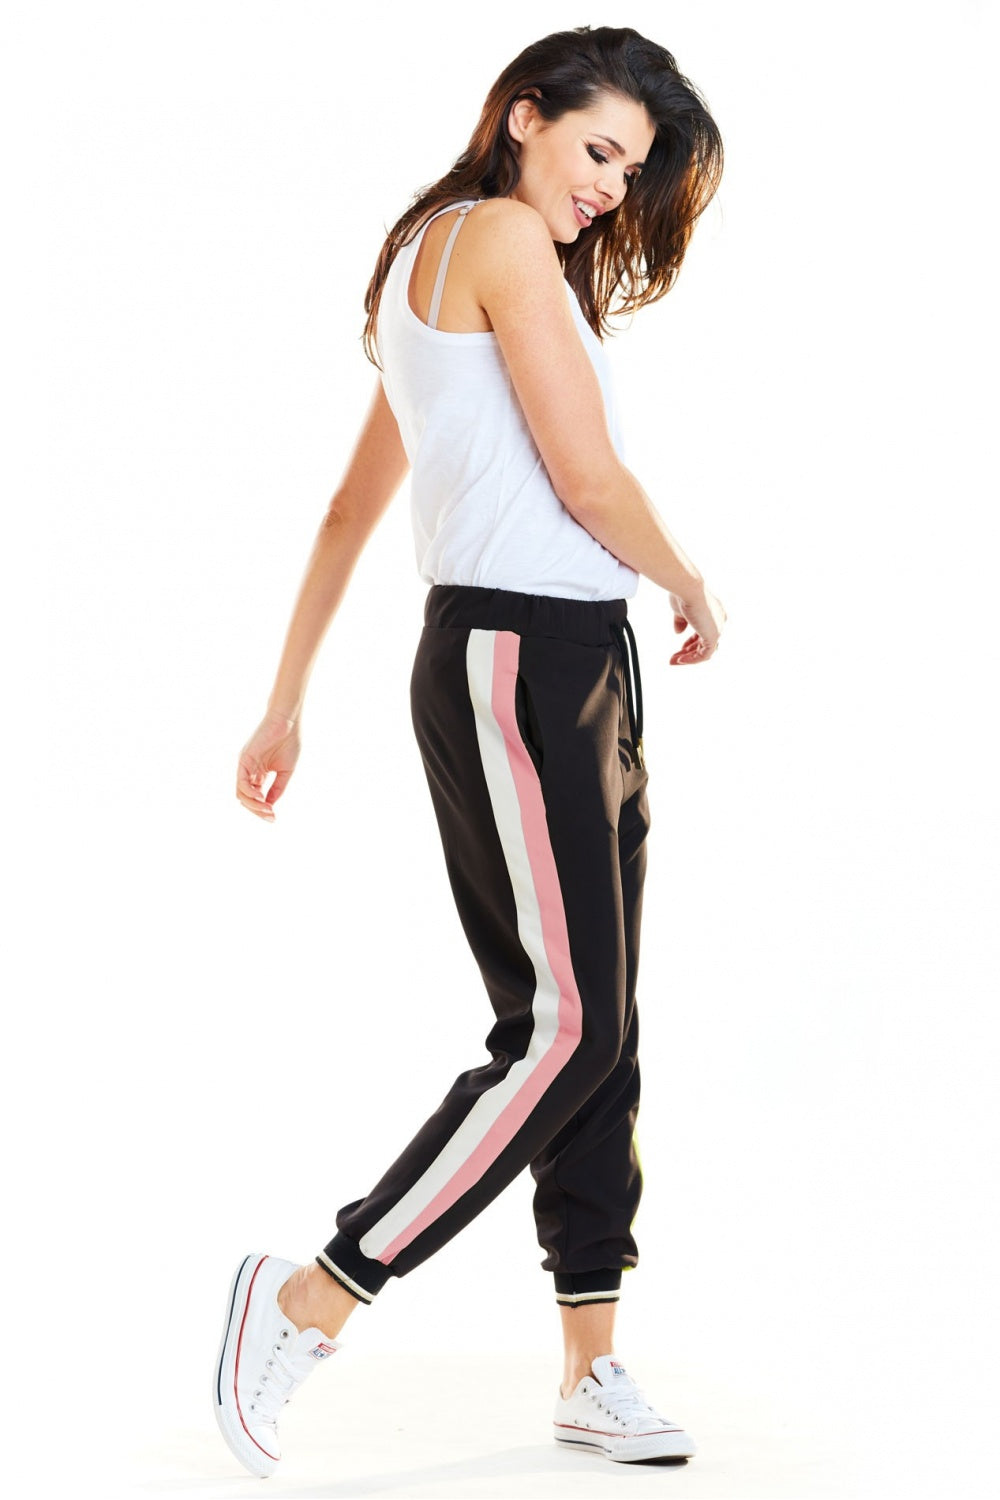 Tracksuit trousers model 139995 awama Posh Styles Apparel